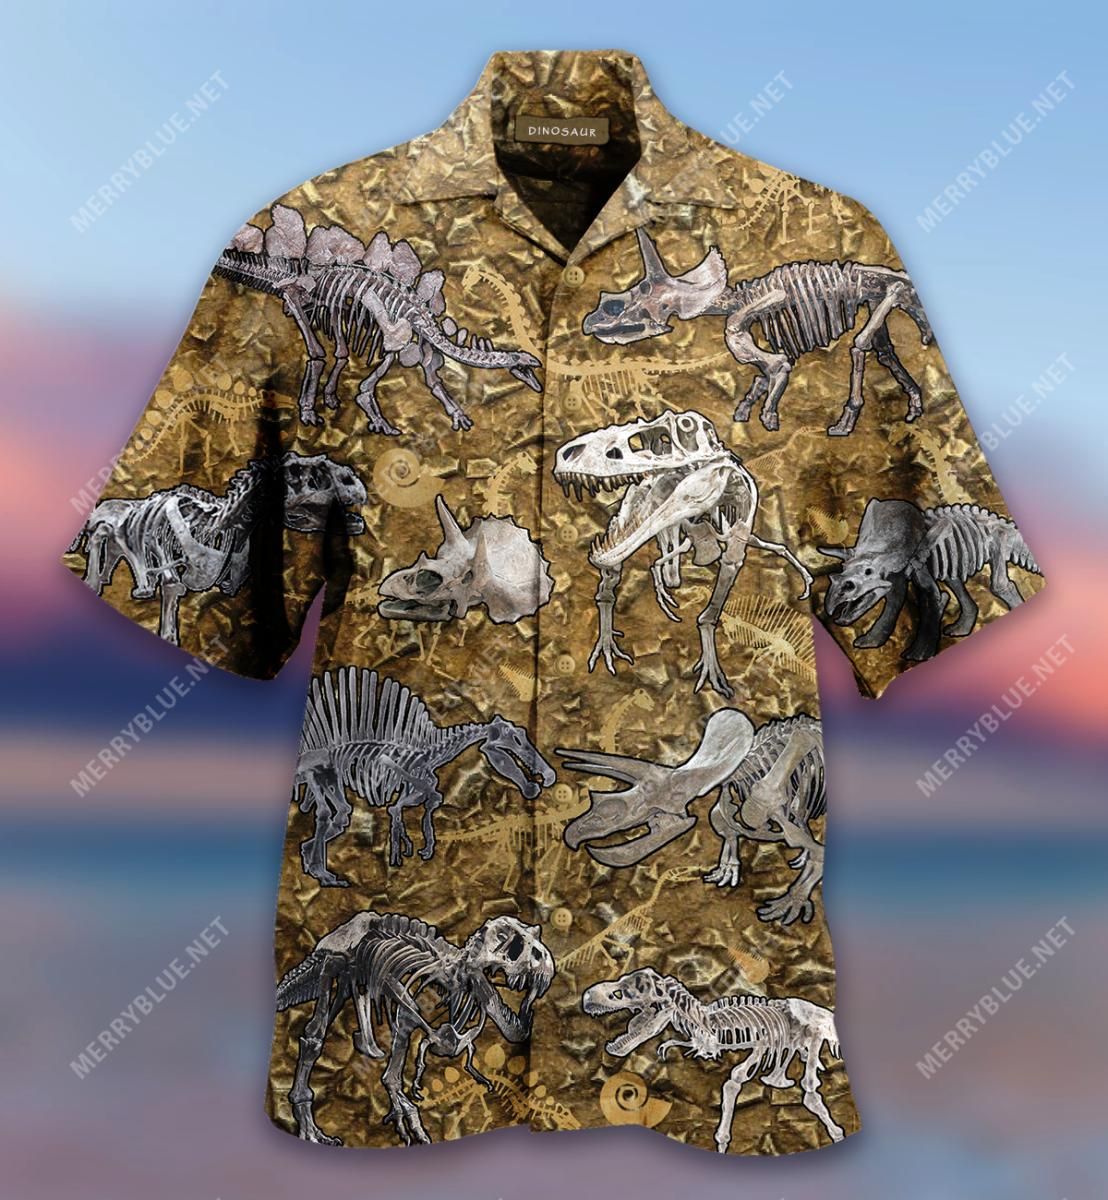 Dinosaur Fossil Archeology Aloha Hawaiian Shirt Colorful Short Sleeve Summer Beach Casual Shirt For Men And Women